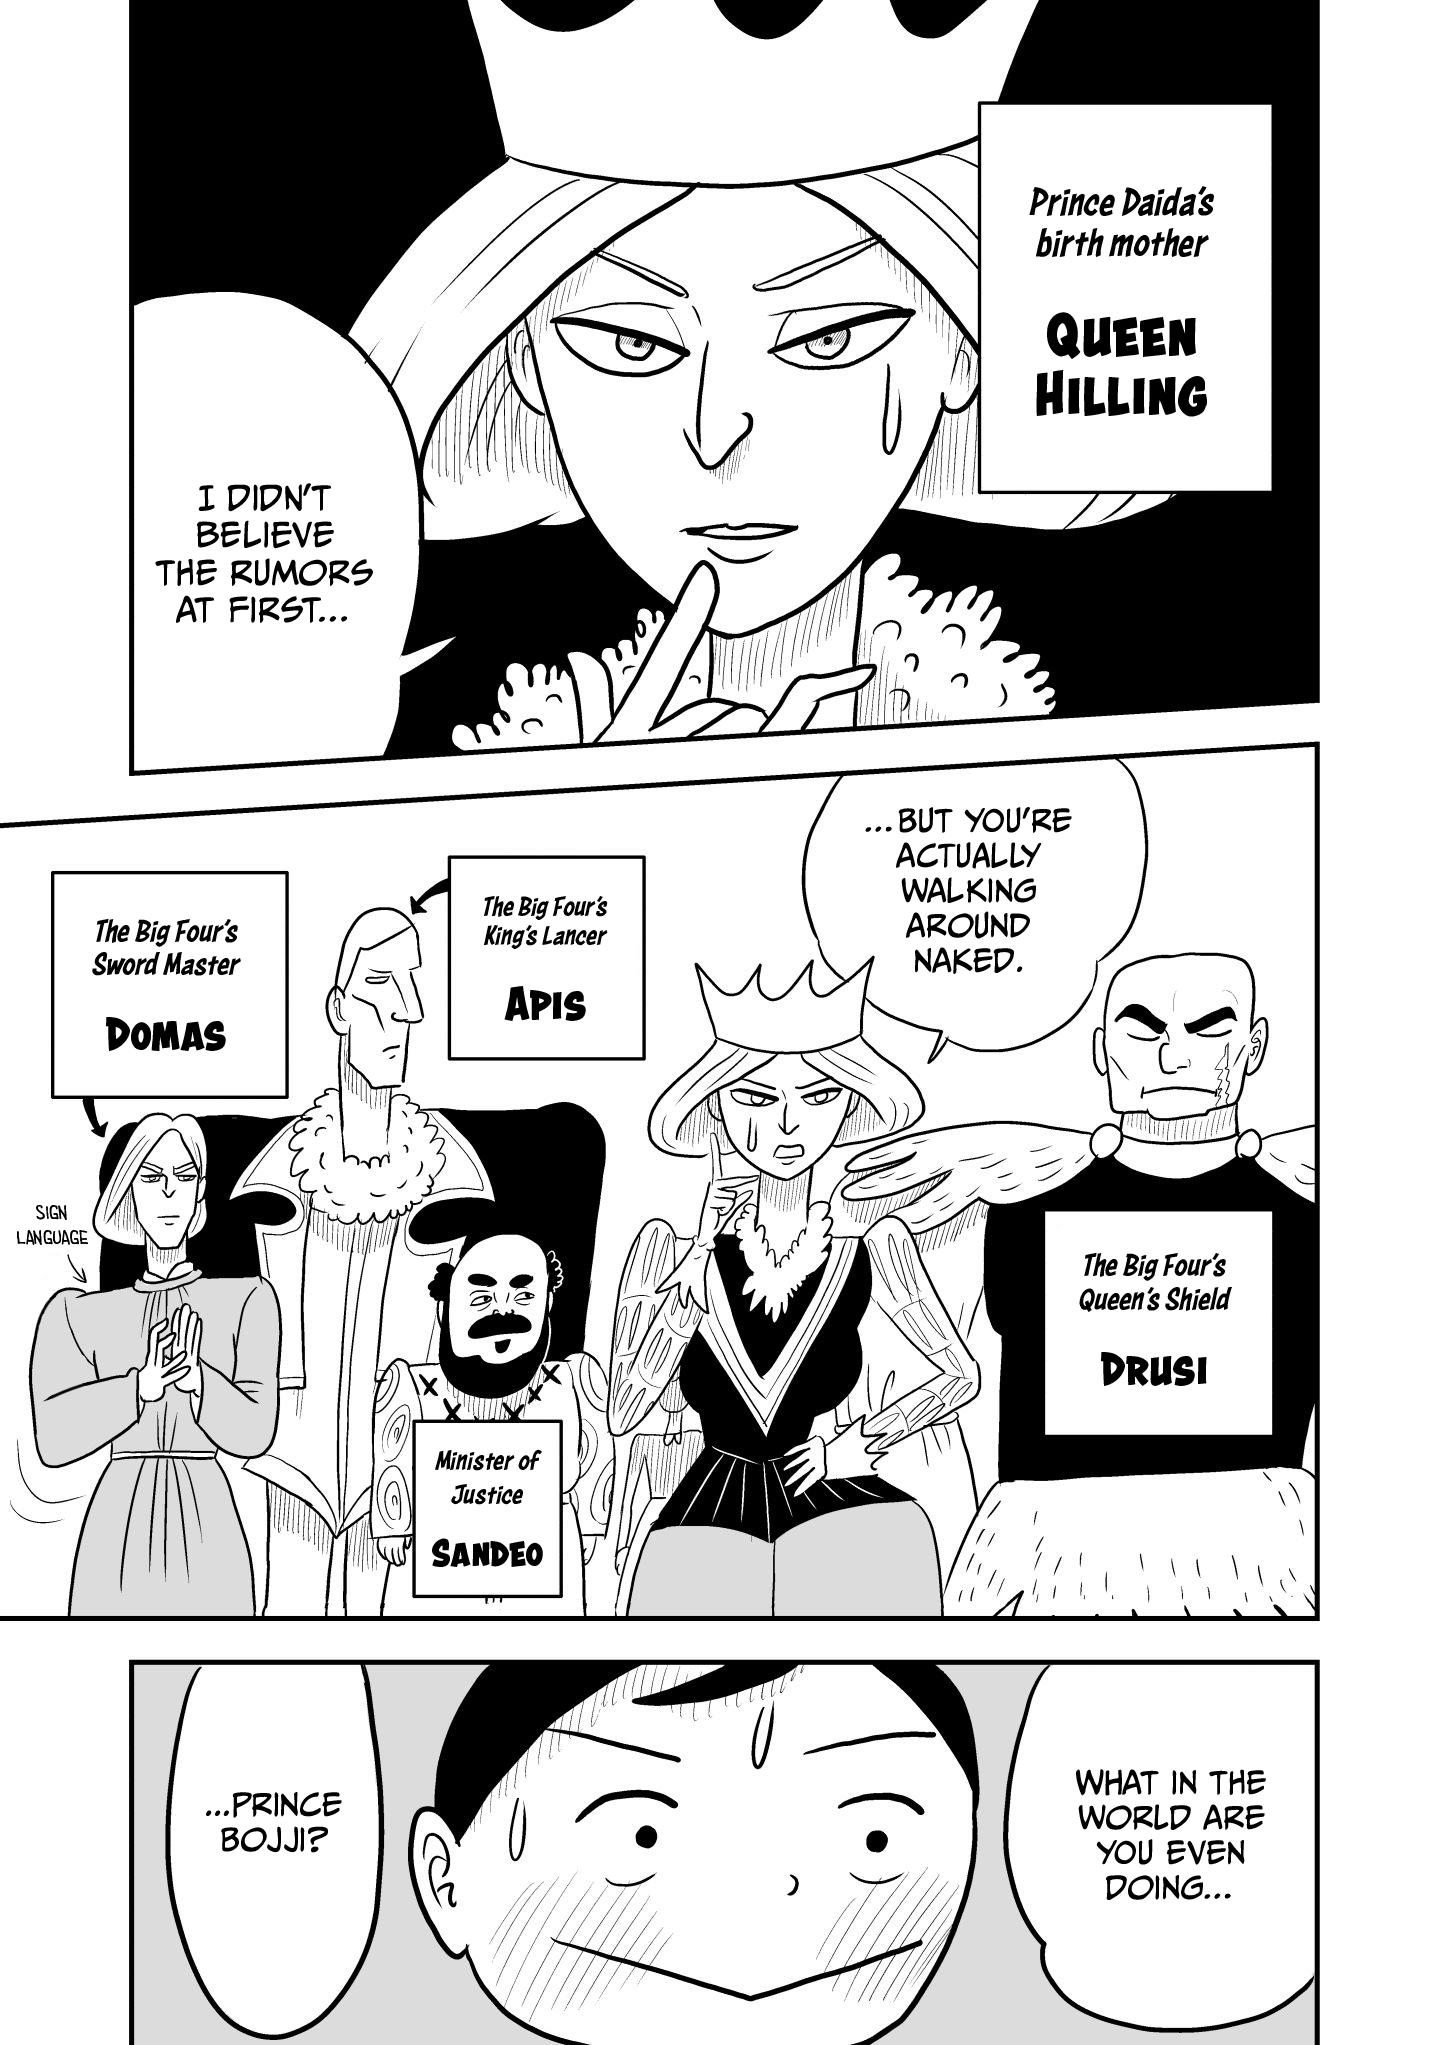 Ranking of Kings, Chapter 166 - Ranking of Kings Manga Online